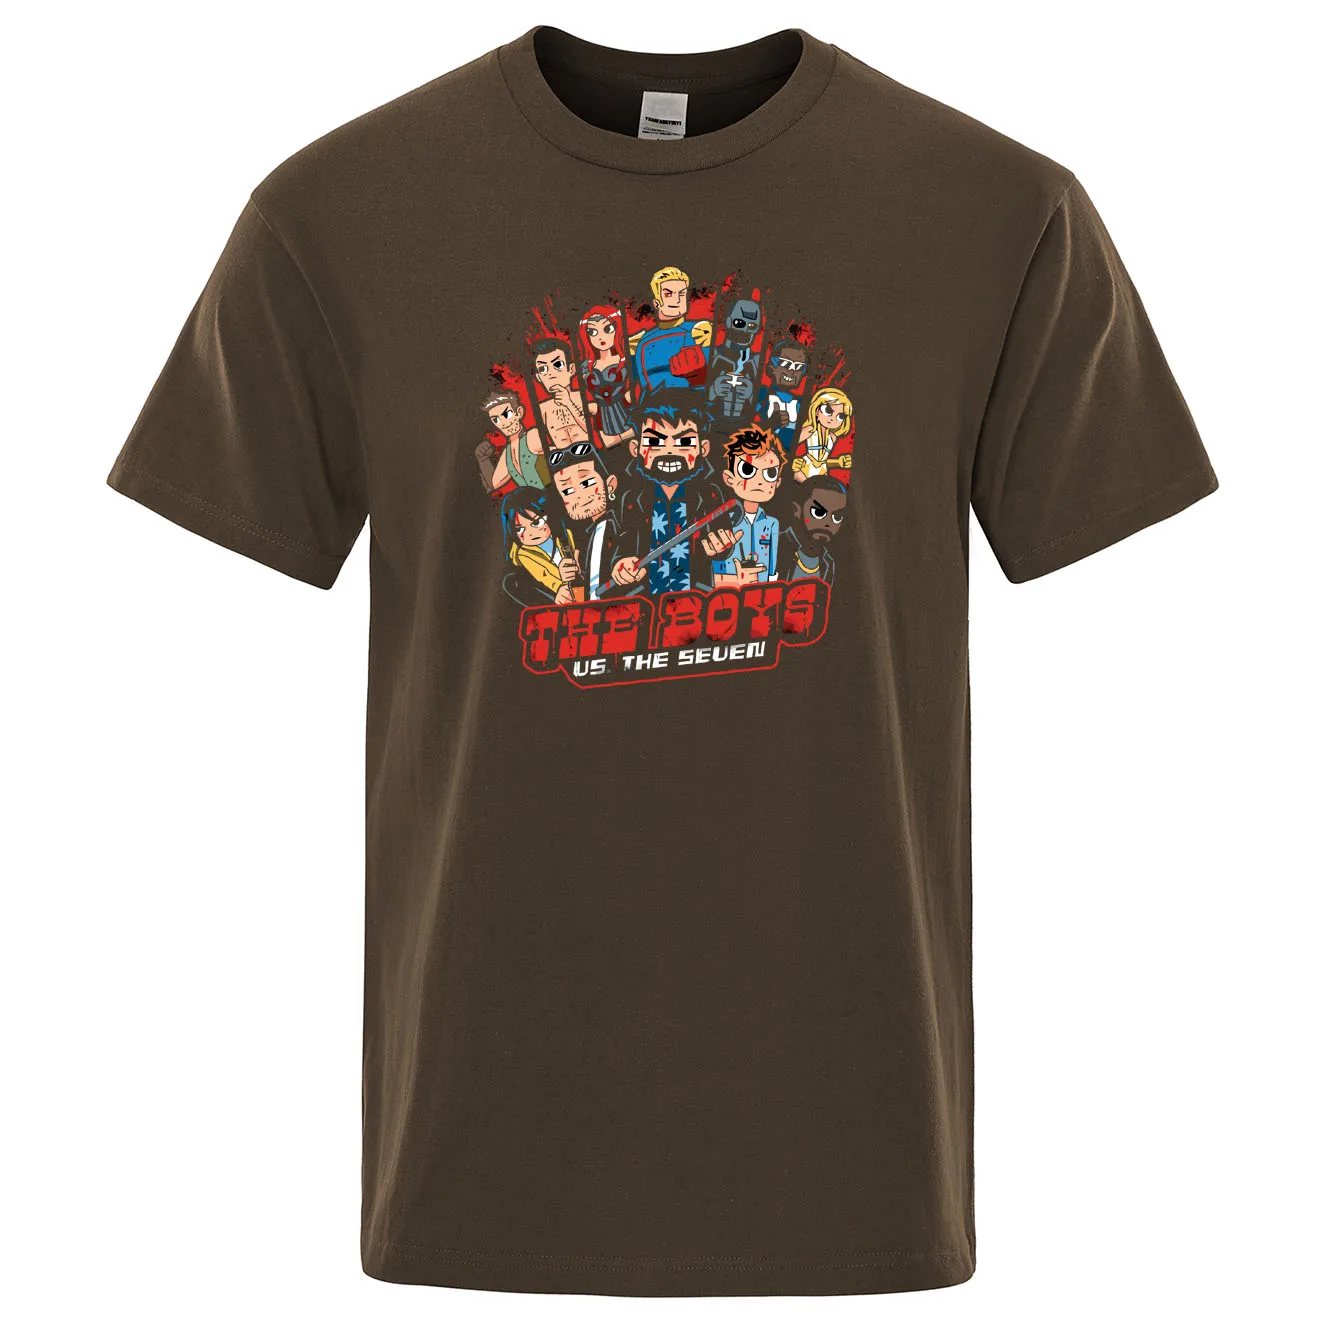 

The Boys TV Show Tops Anti Hero T-Shirt Homelander The Seven Men Tee shirt Casual O-Neck Streetwear Summer Cotton Fashion Tshirt